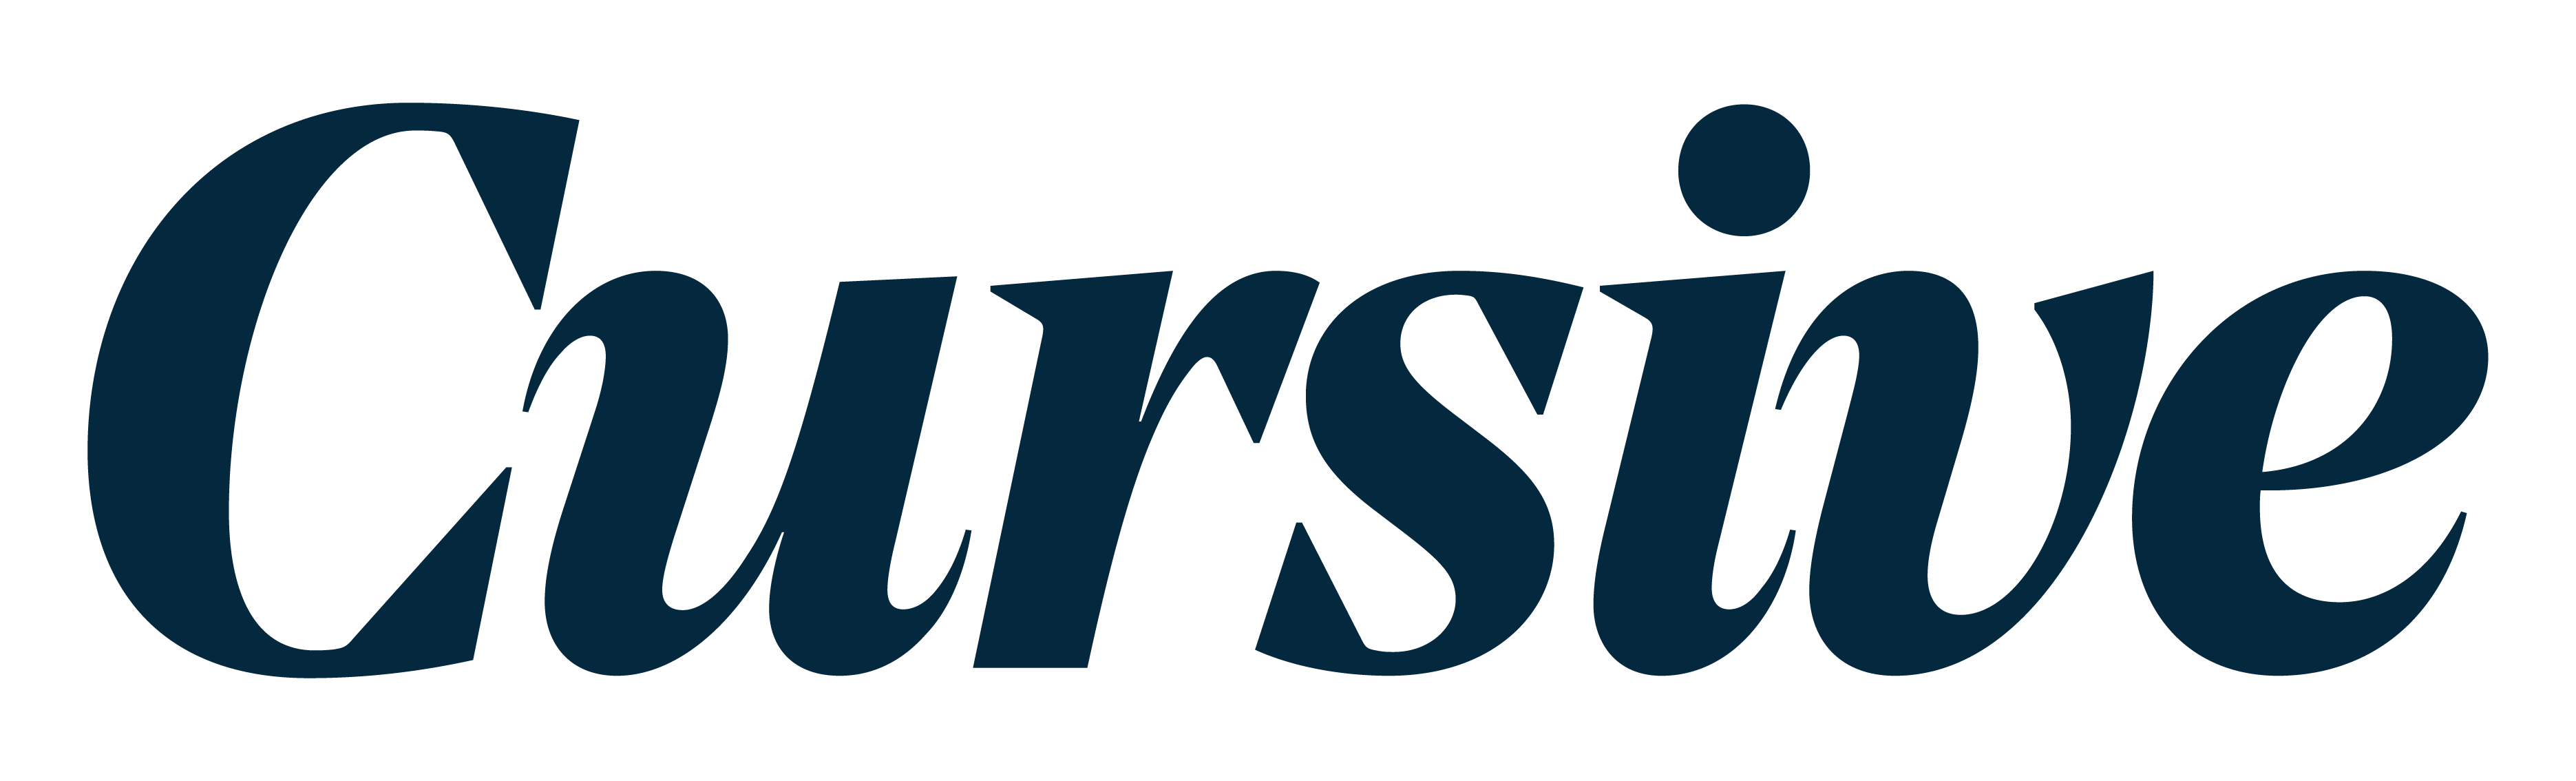 logo for Cursive